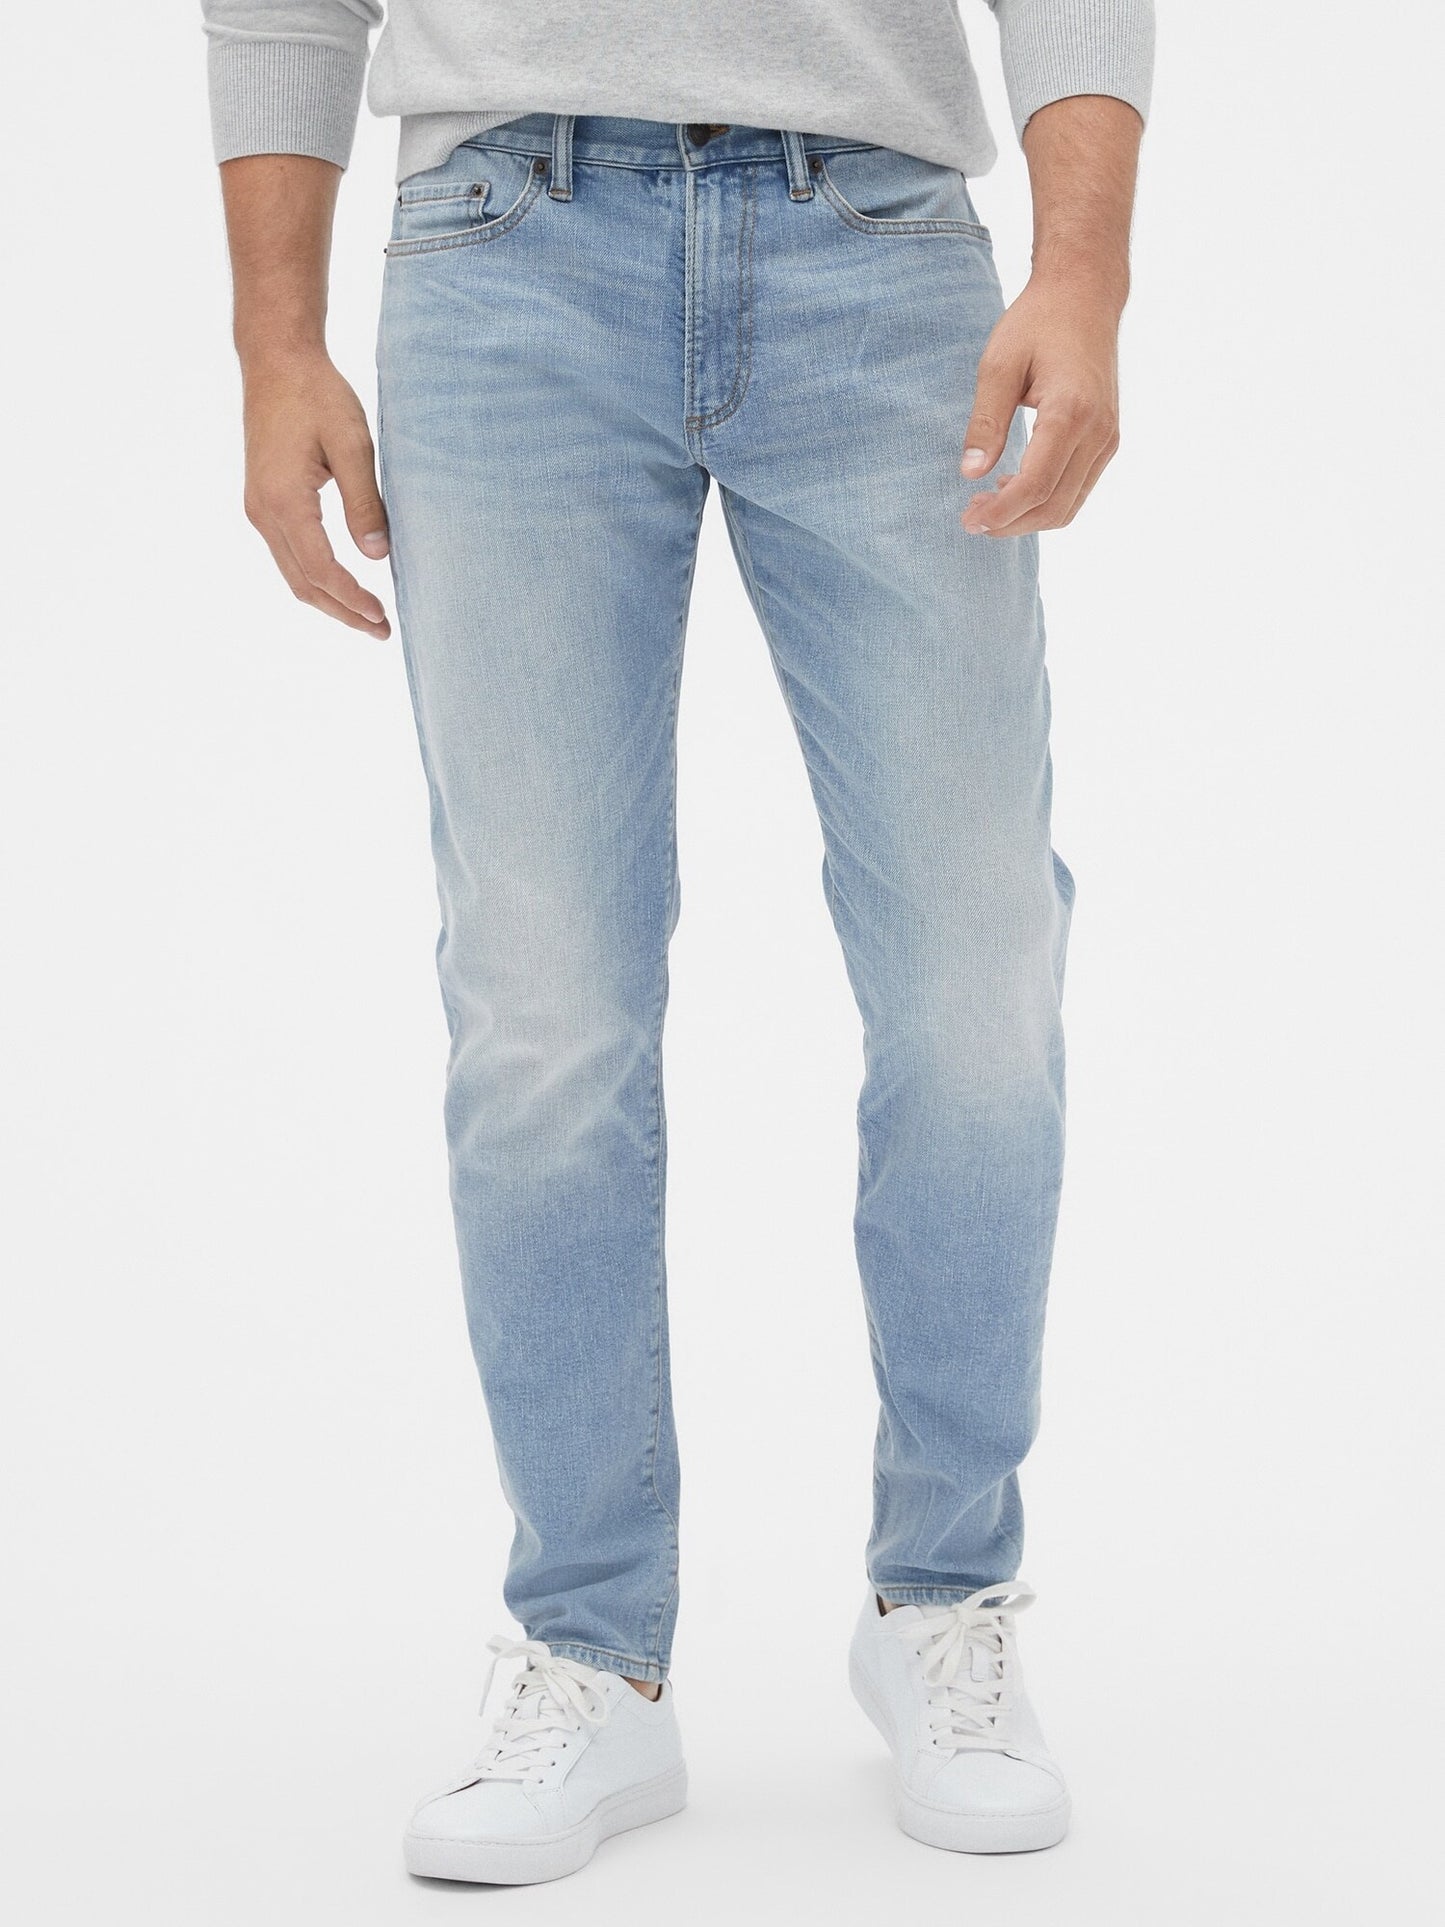 Gap Slim Taper Jeans With Gapflex - Light Wash